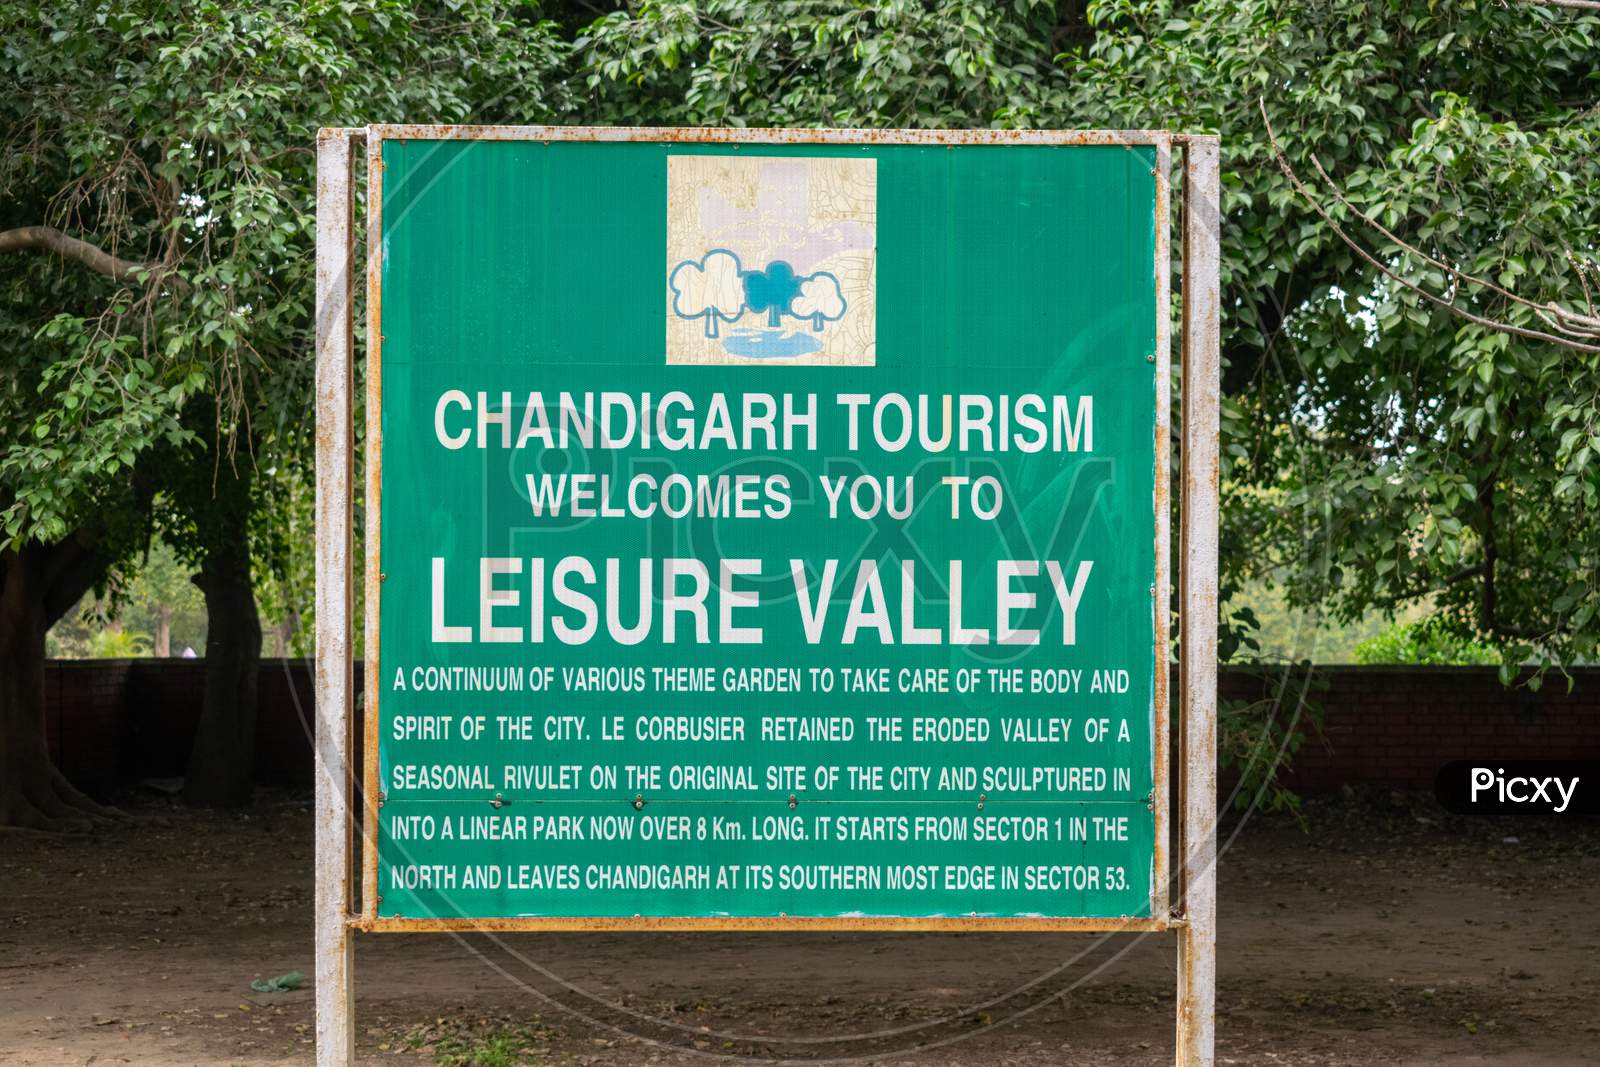 Leisure valley information board